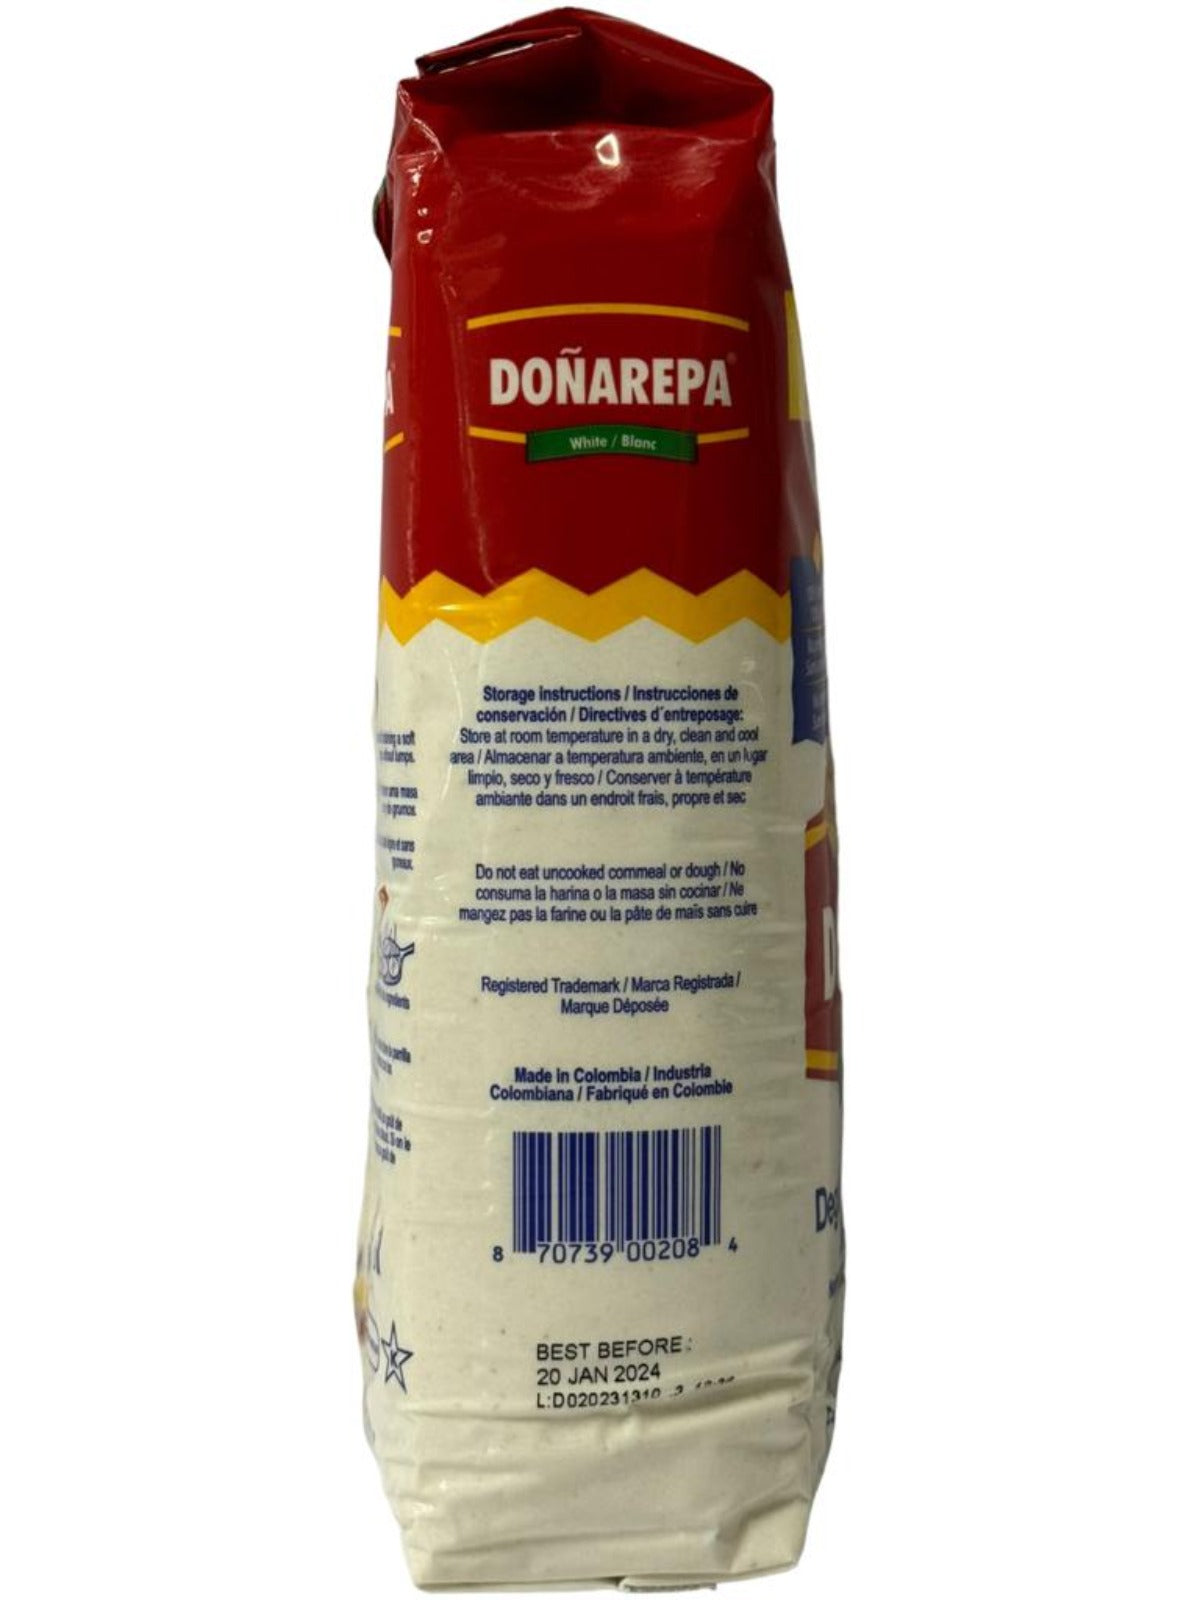 Donarepa Colombian Arepa White Corn Flour Twin Pack + Donarepa Colombian Yellow Corn Flour Twin Pack 1kg ea 4kg total